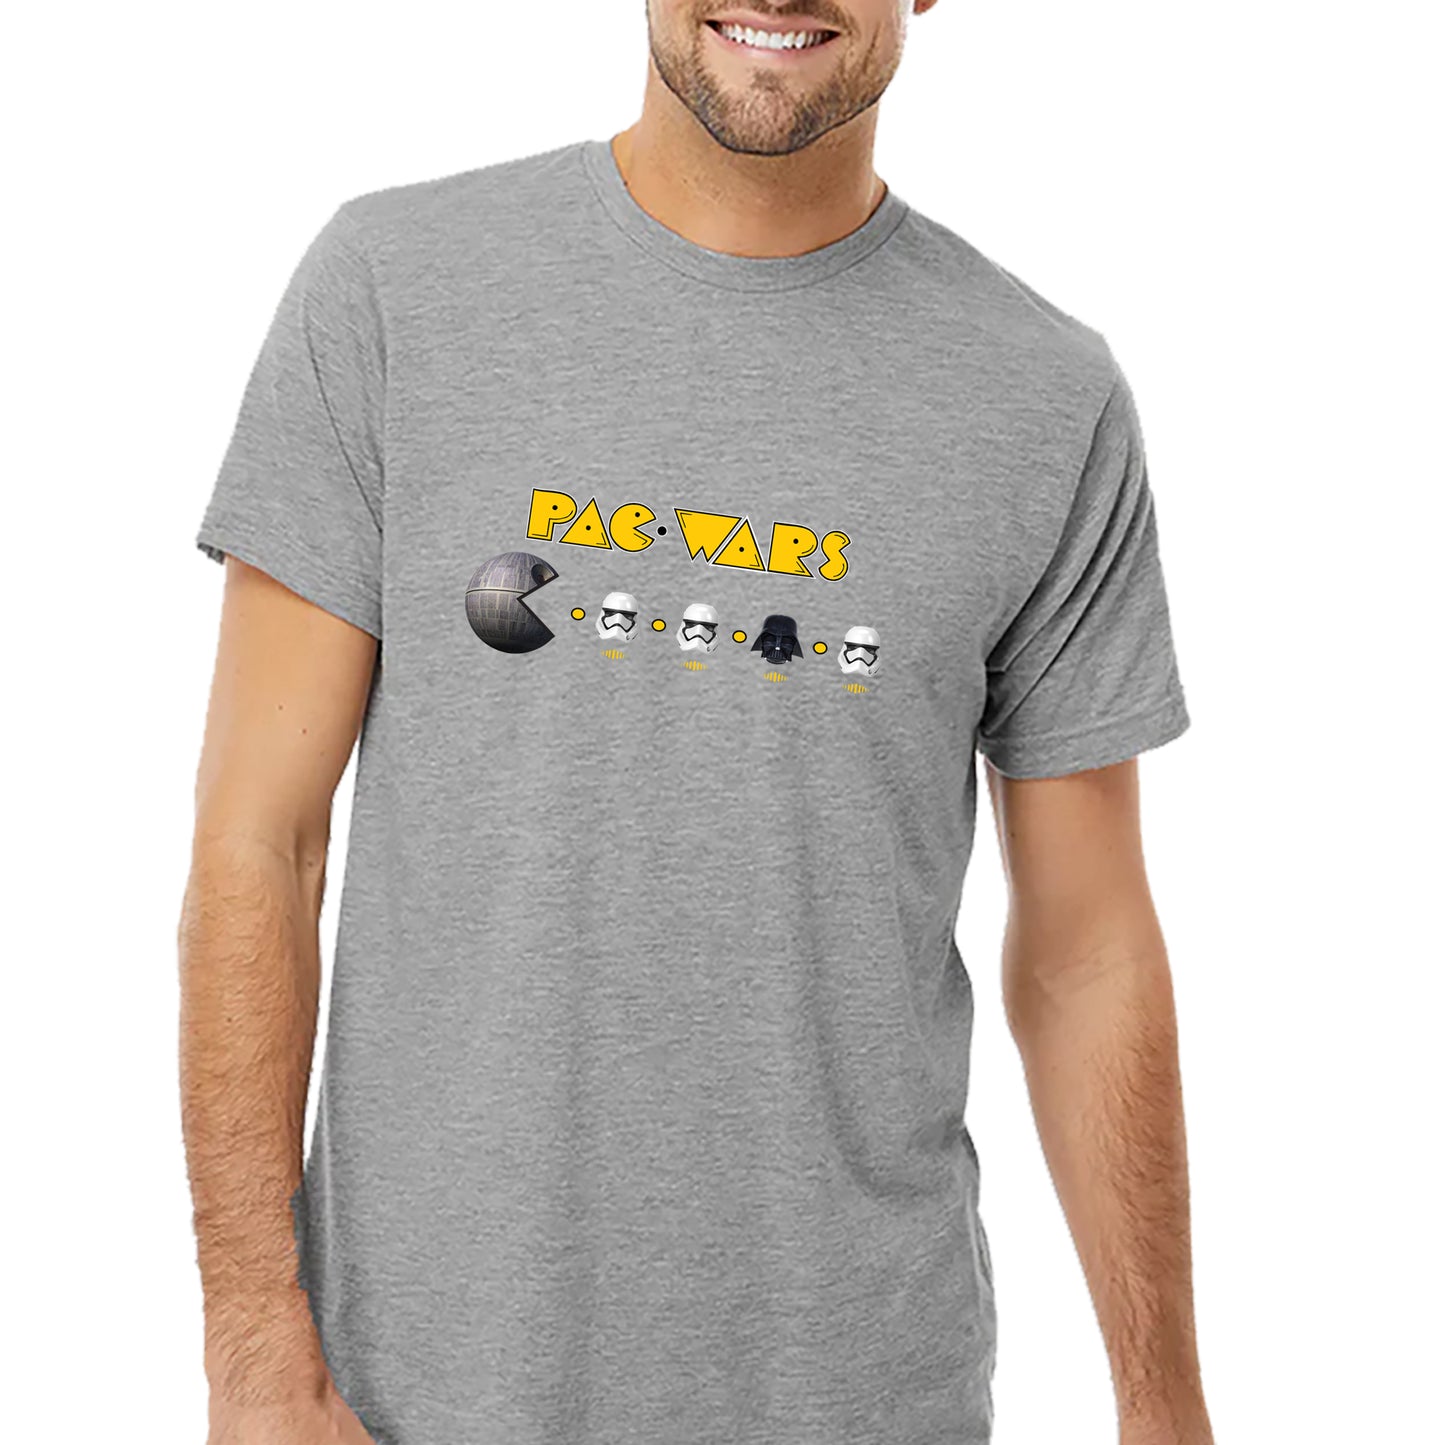 Pac Wars T-shirt